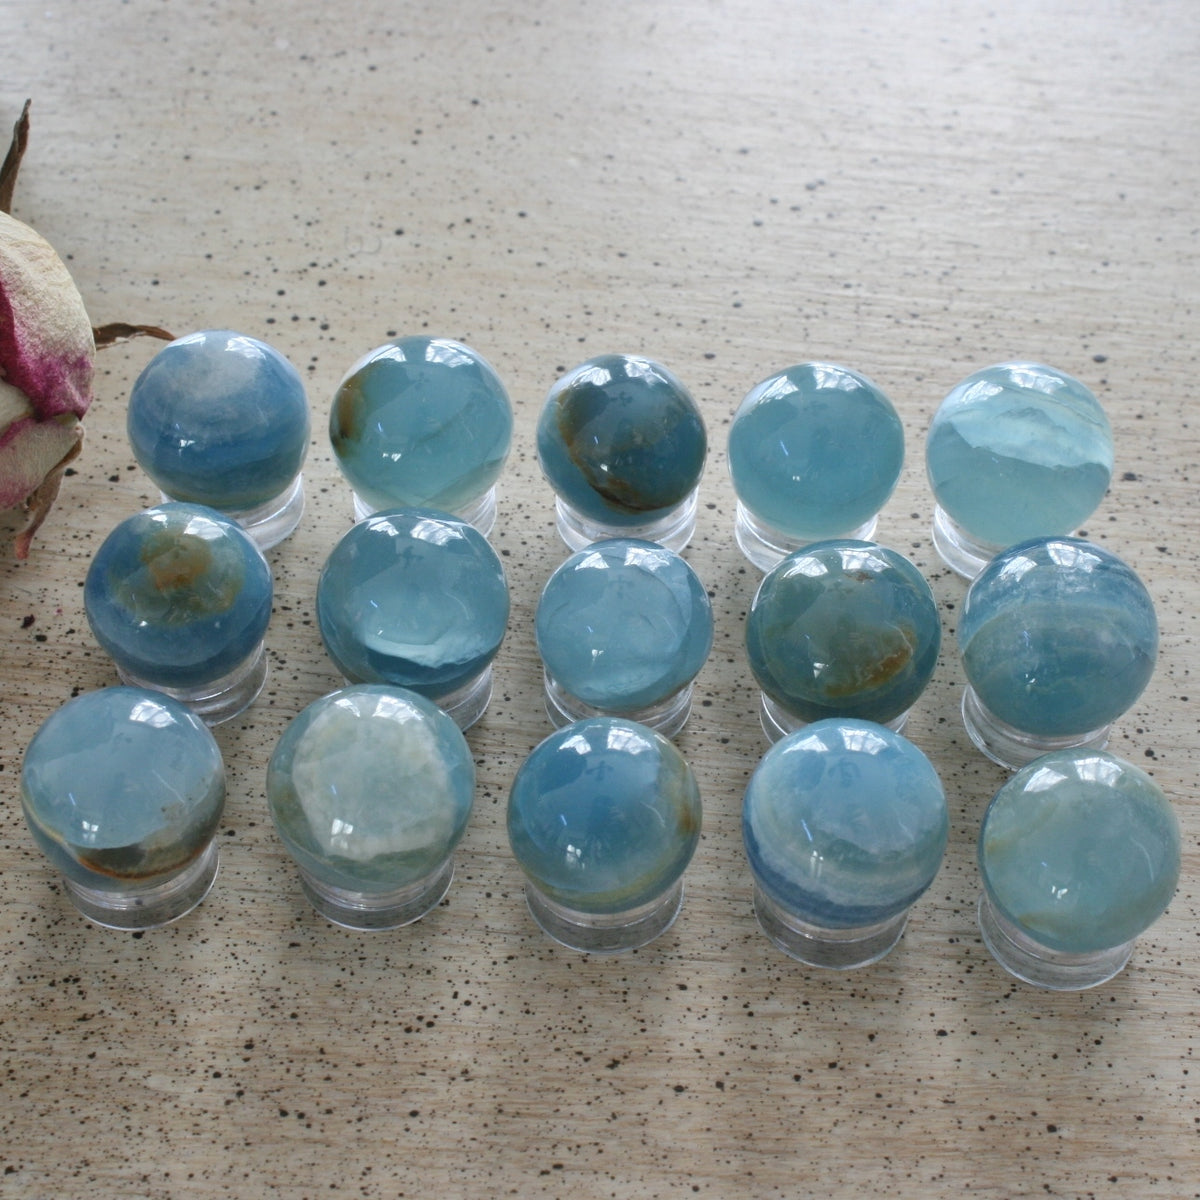 Blue Calcite / Blue Onyx Sphere from Argentina, also called Lemurian Aquatine Calcite, SMSP4